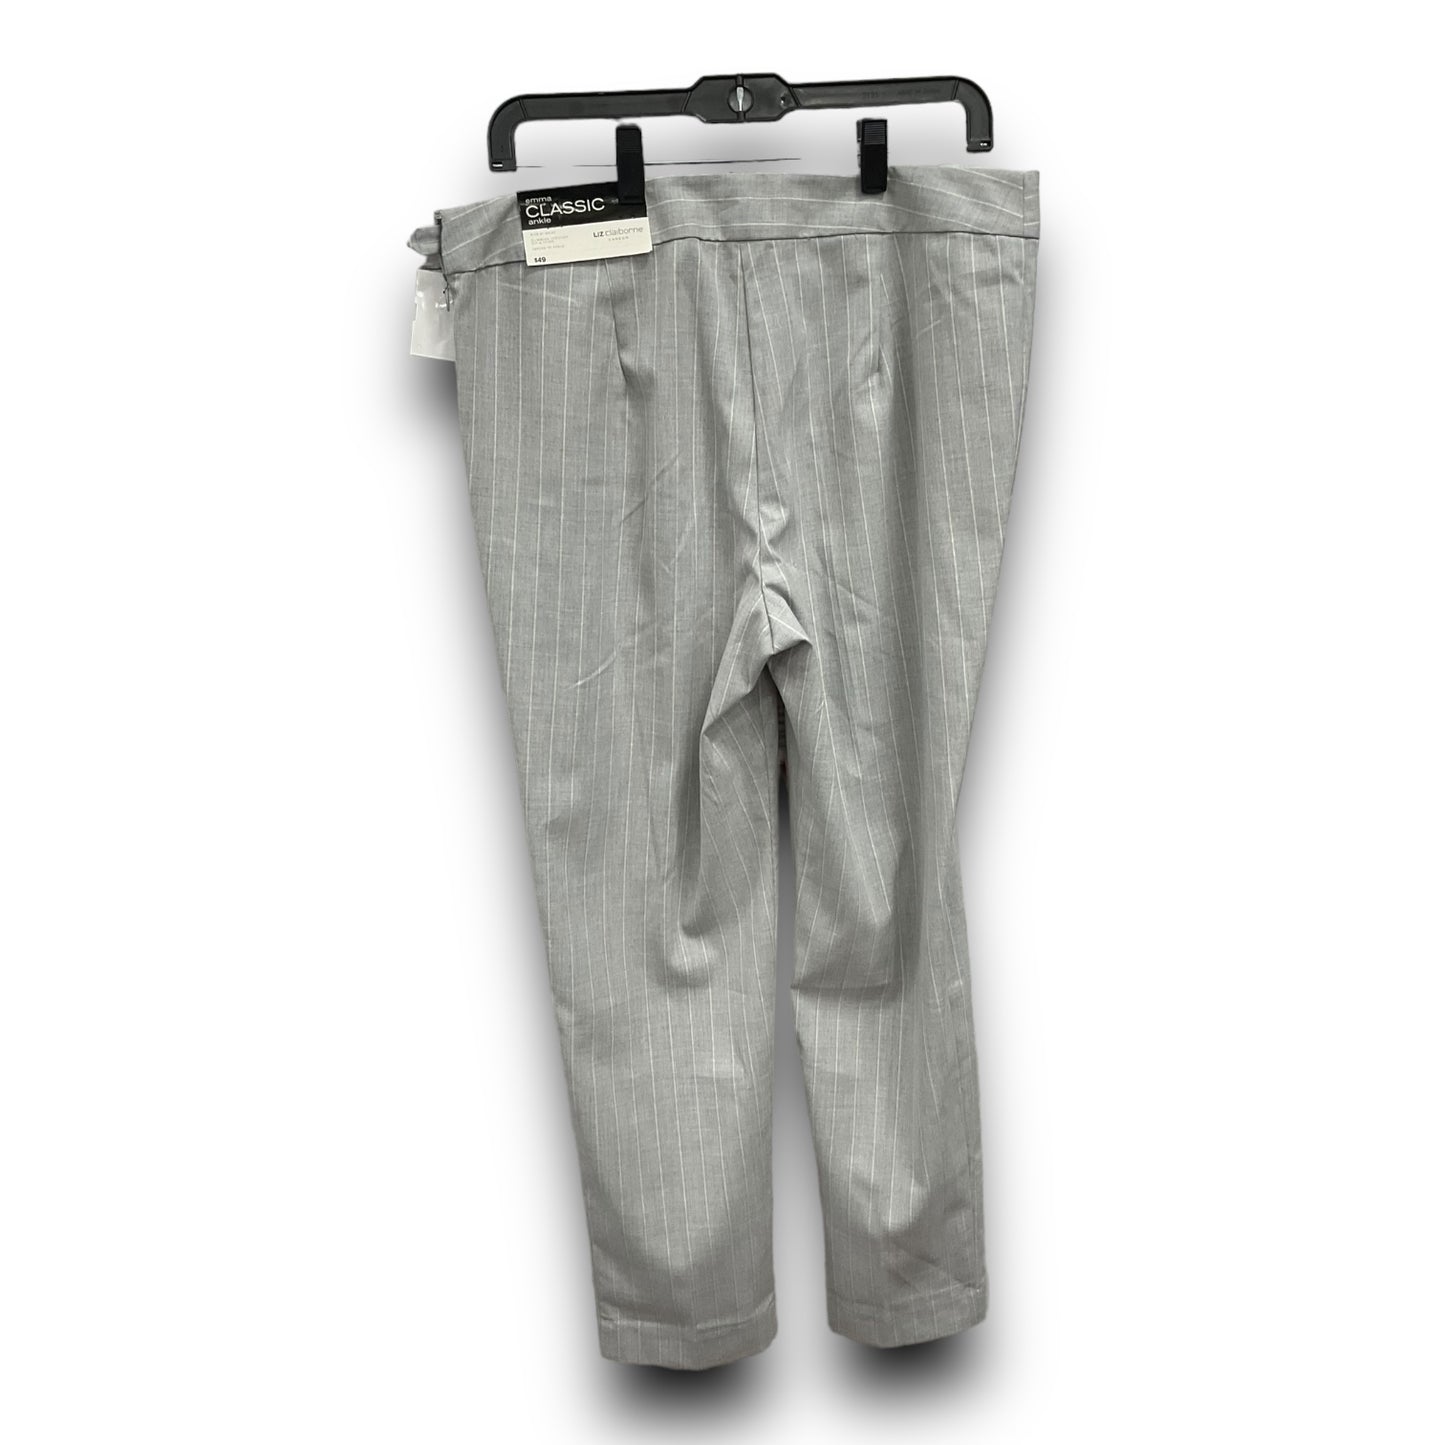 Pants Dress By Liz Claiborne  Size: 8